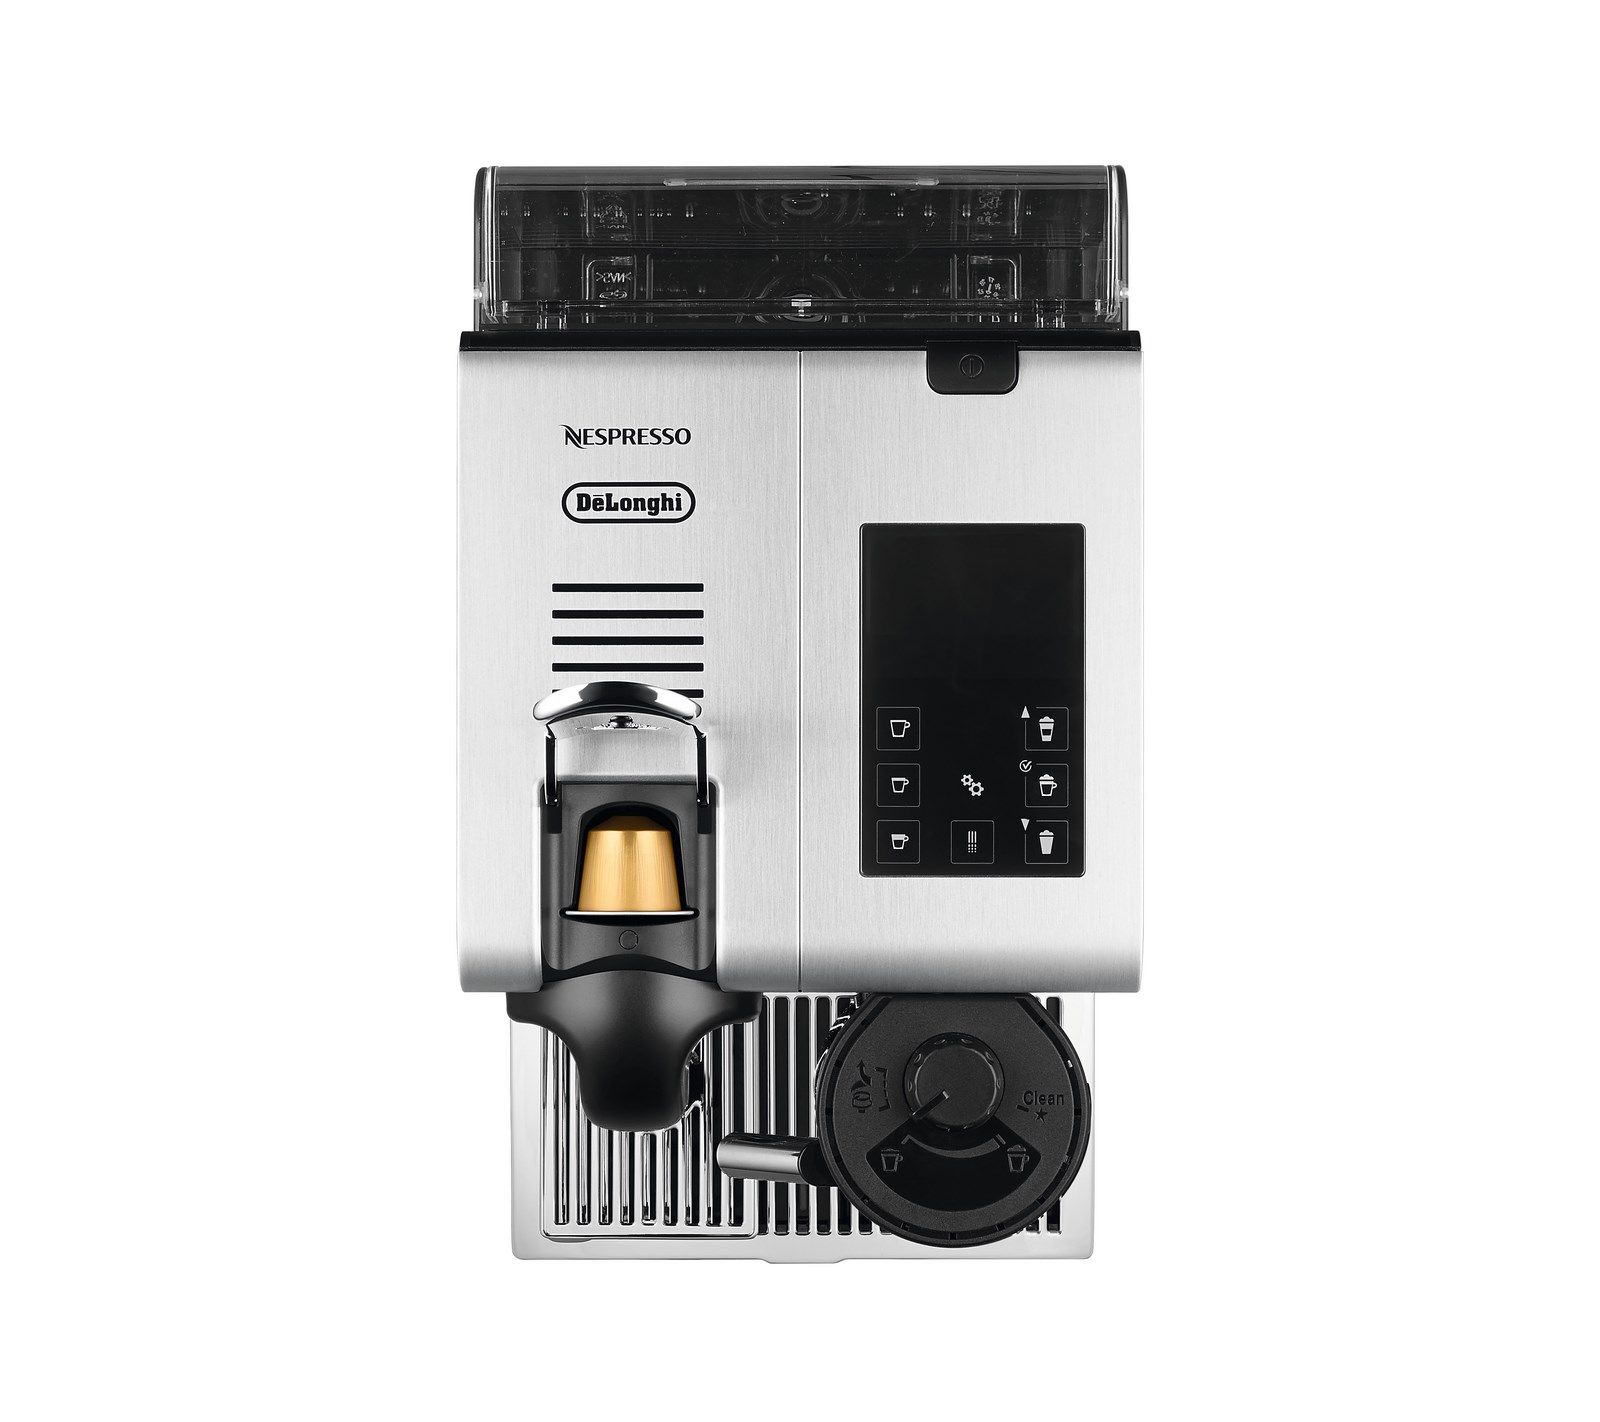  Lattissima Pro F456 Kaffemaskine Fra Krups, Black